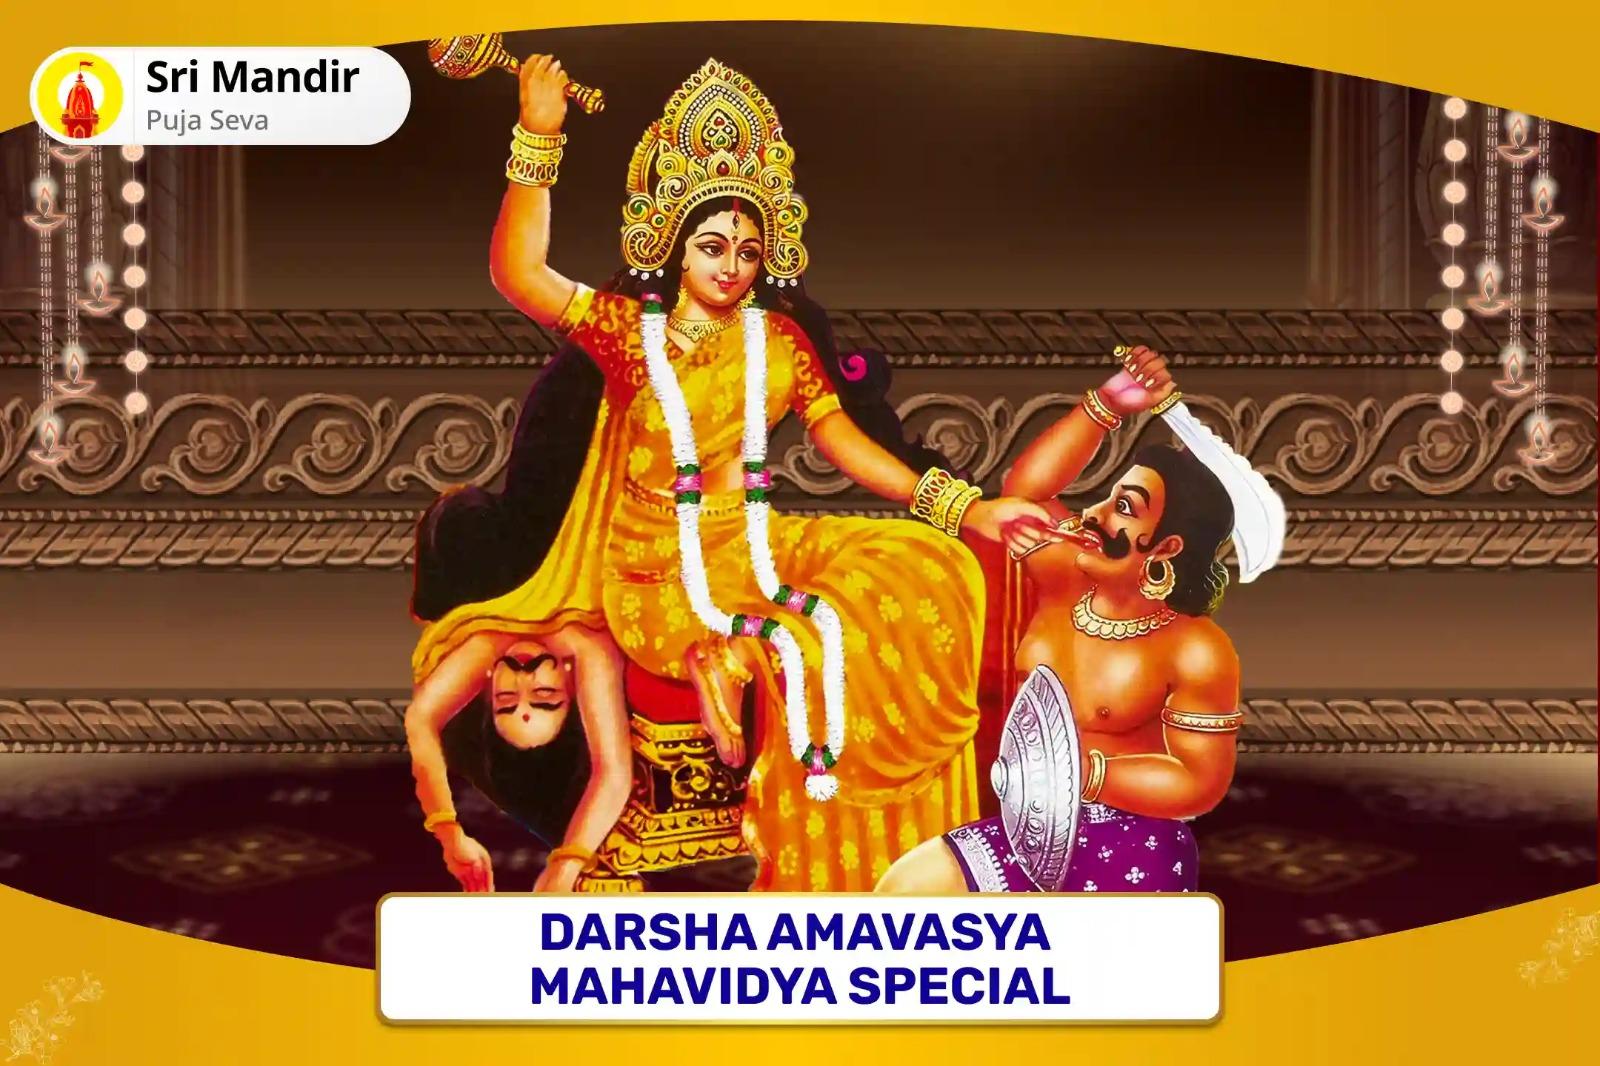 Darsha Amavasya Mahavidya Special 36,000 Maa Bagalamukhi Mool Mantra Jaap and Havan for Victory Over Enemies, Protection from Life-Threatening Diseases and Accidents